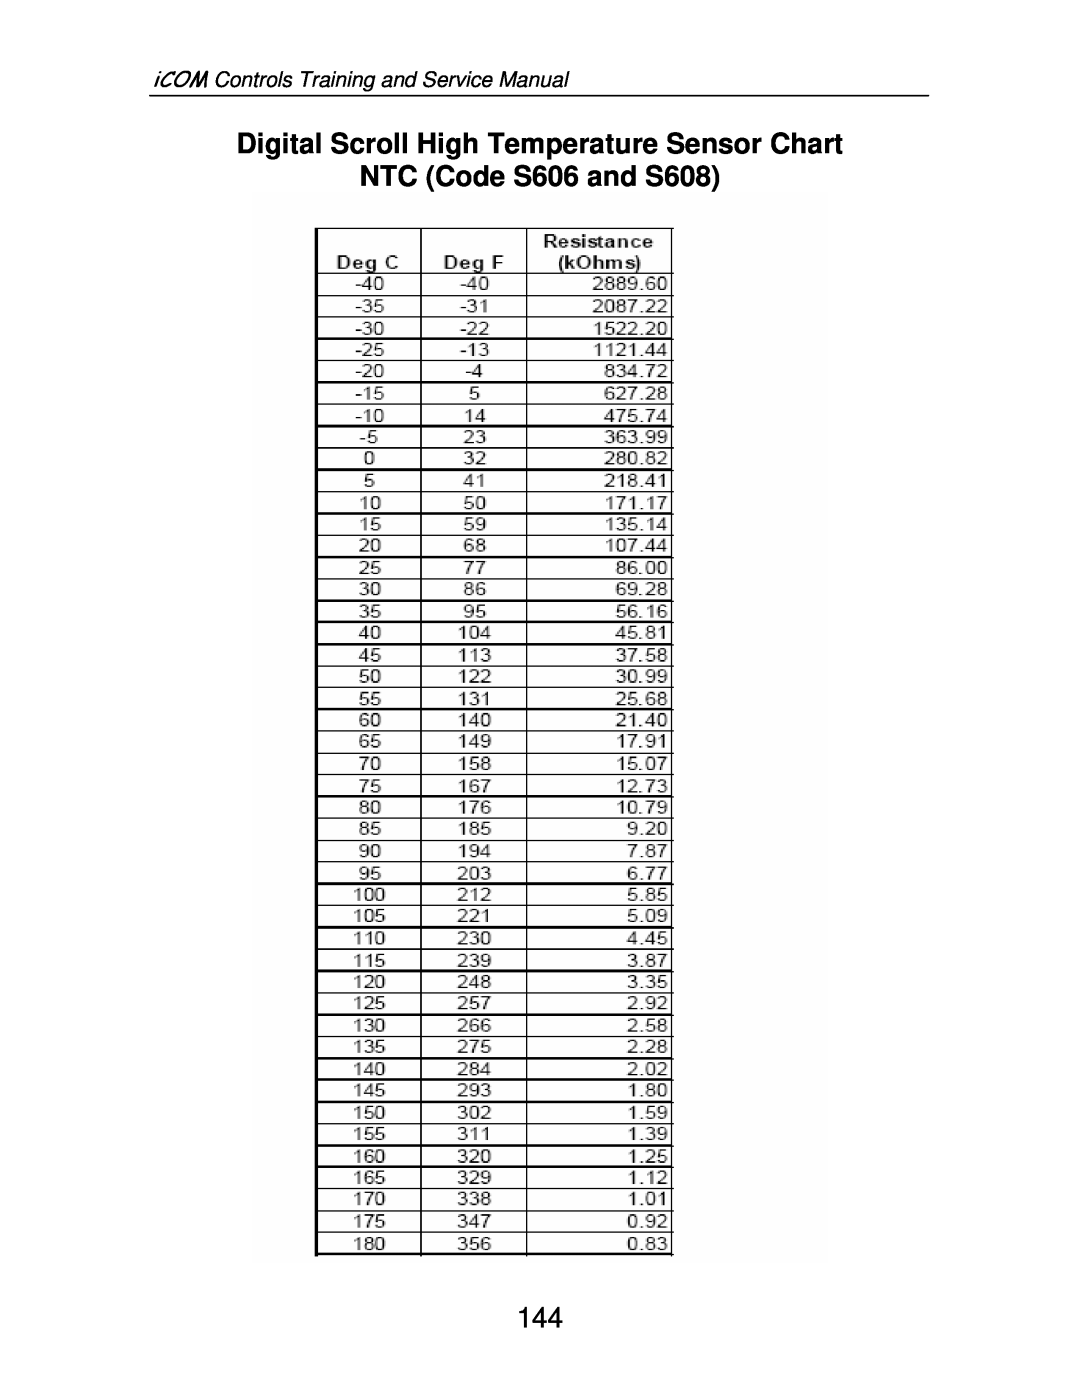 Liebert TM-10098 service manual Digital Scroll High Temperature Sensor Chart, NTC Code S606 and S608 